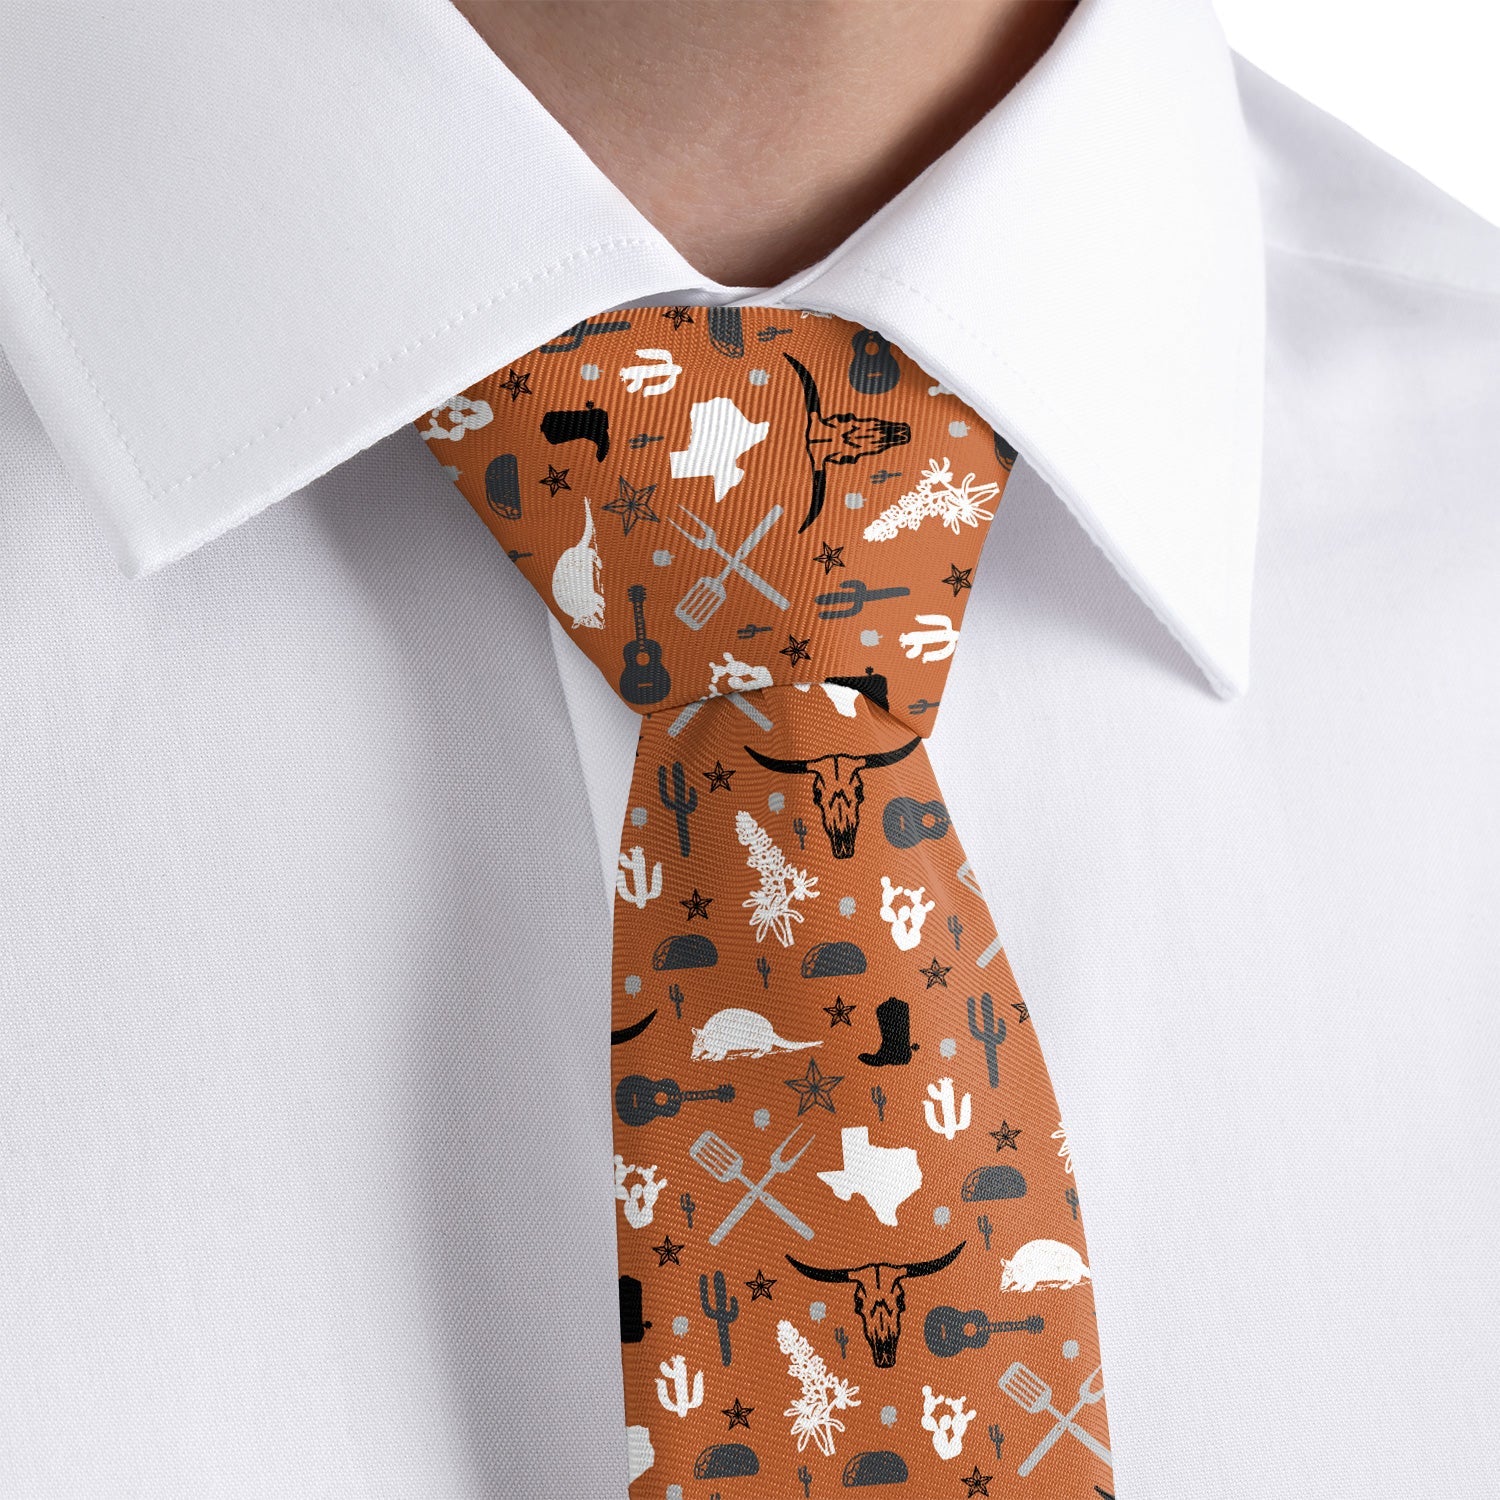 Texas State Heritage Necktie -  -  - Knotty Tie Co.